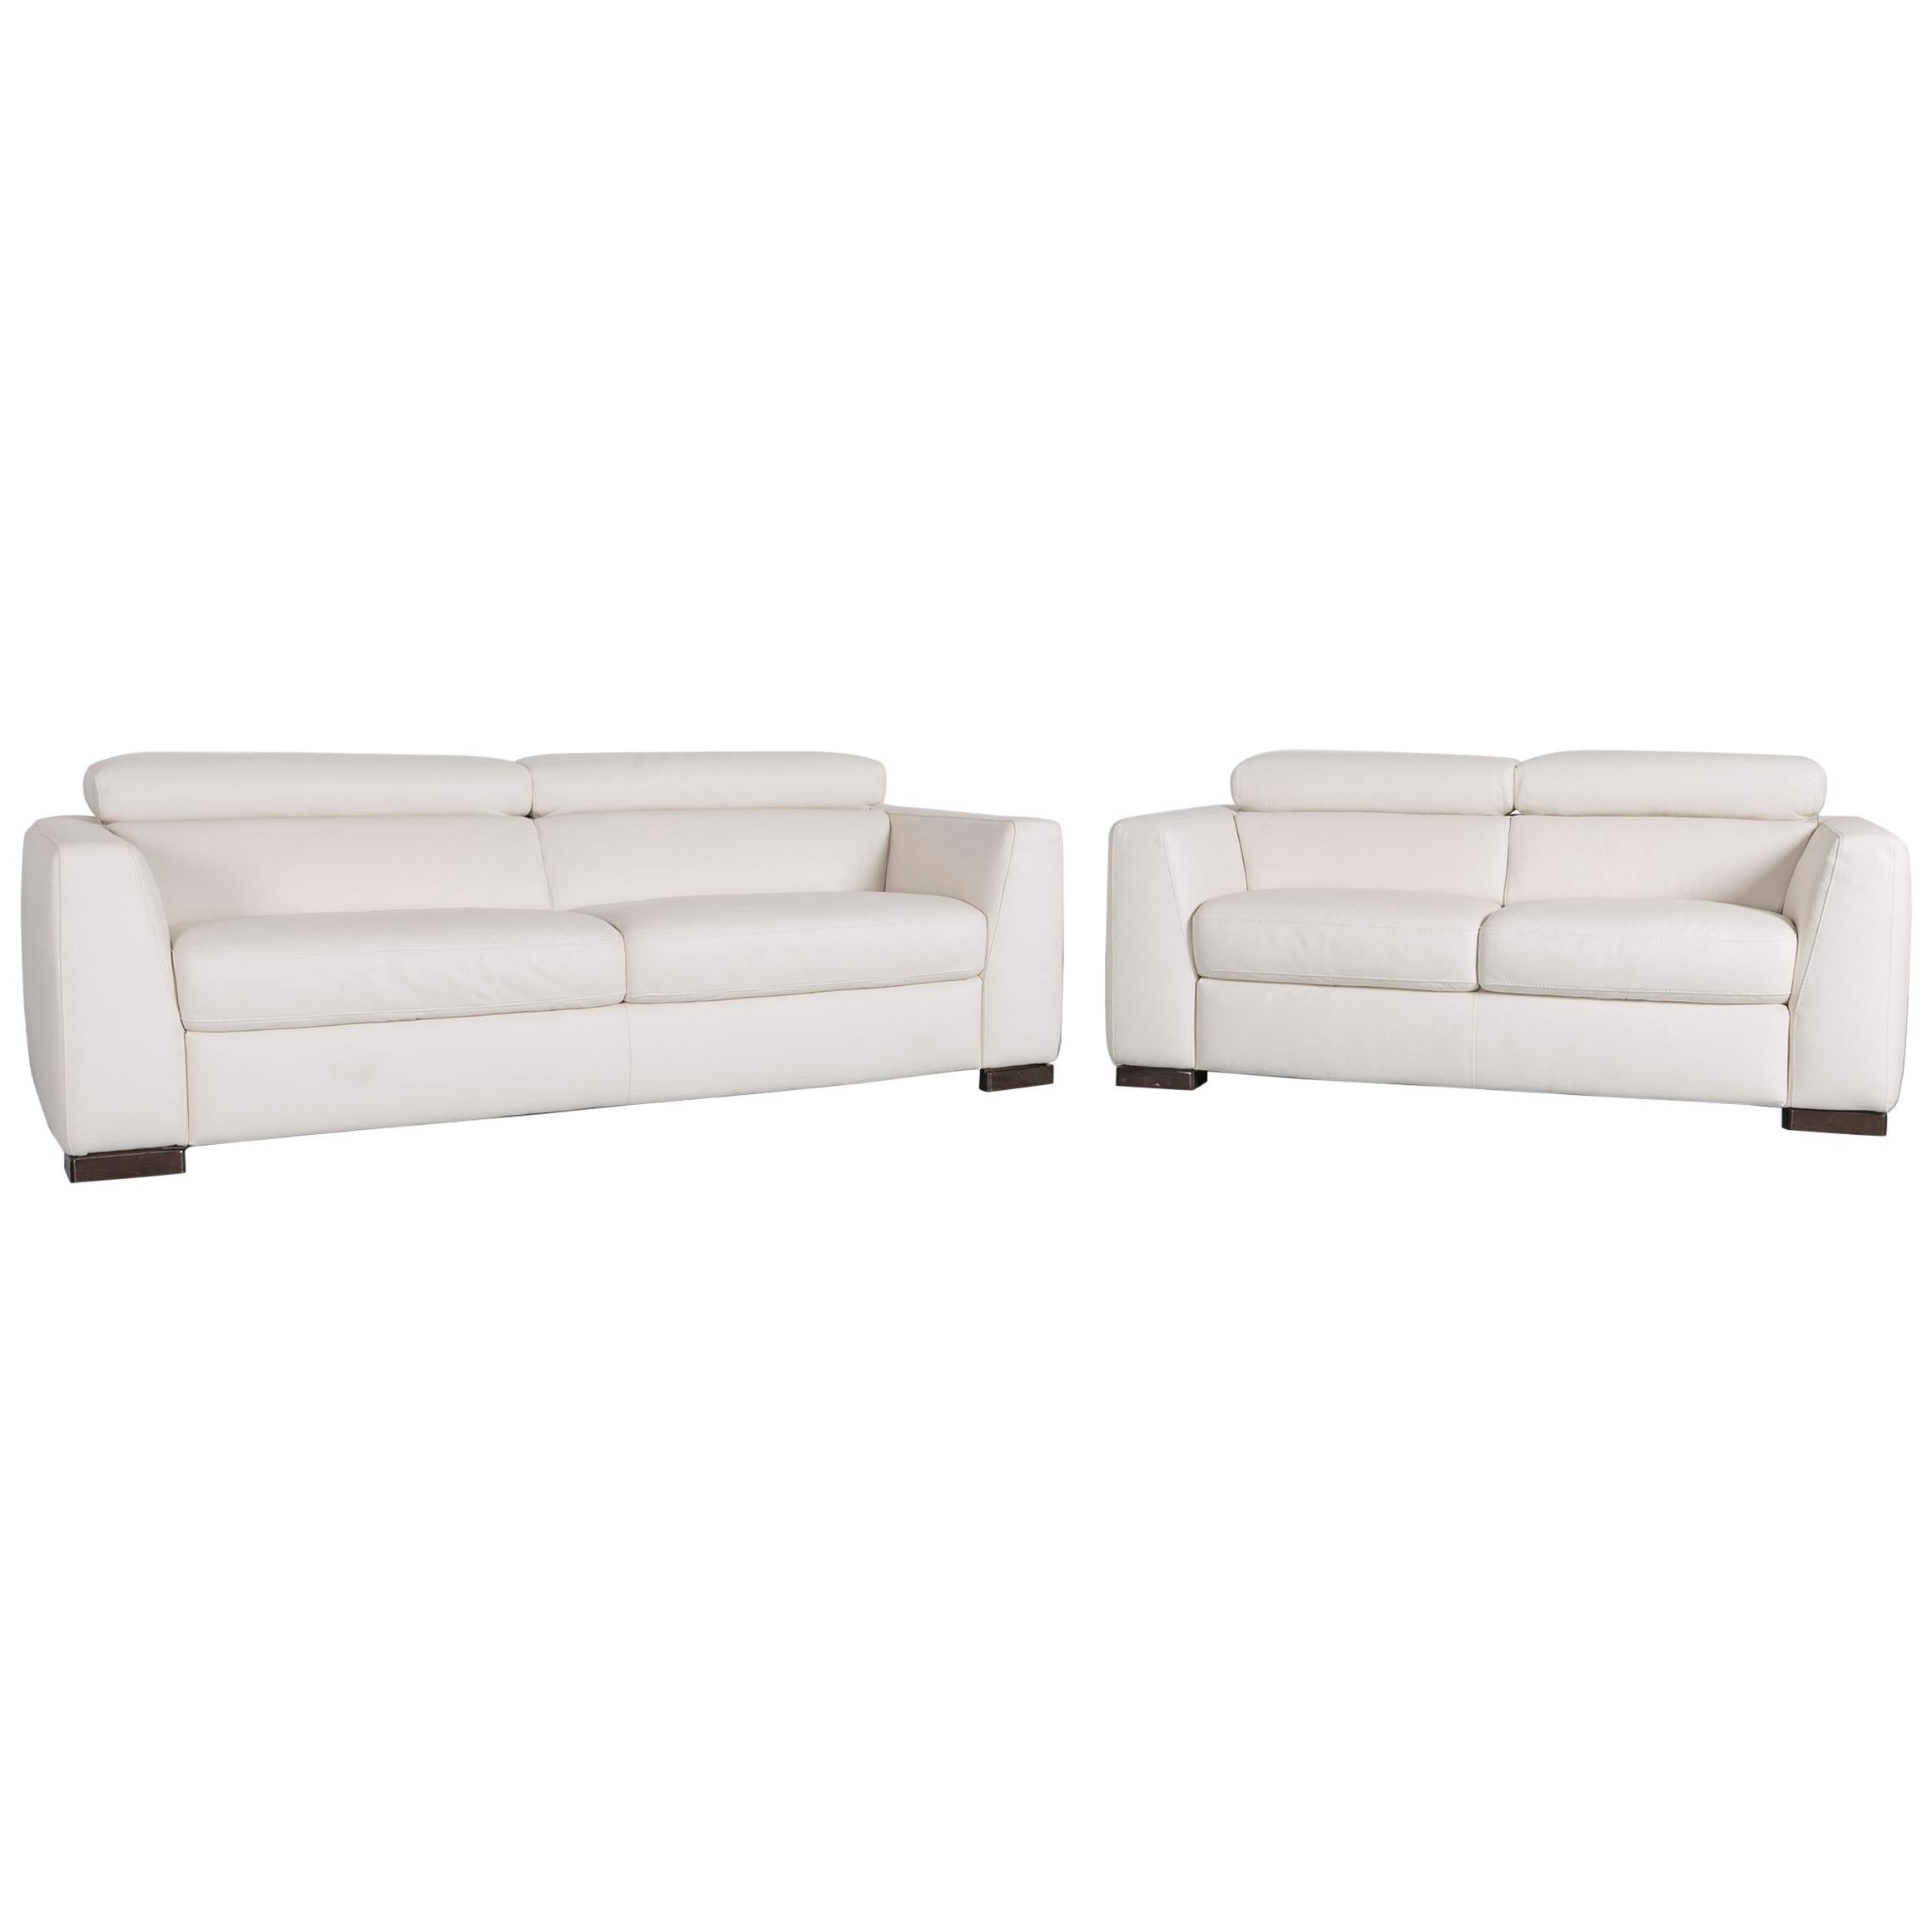 Italsofa Designer Leather Sofa Set Crème White Modern Two-Seat Three-Seat Couch